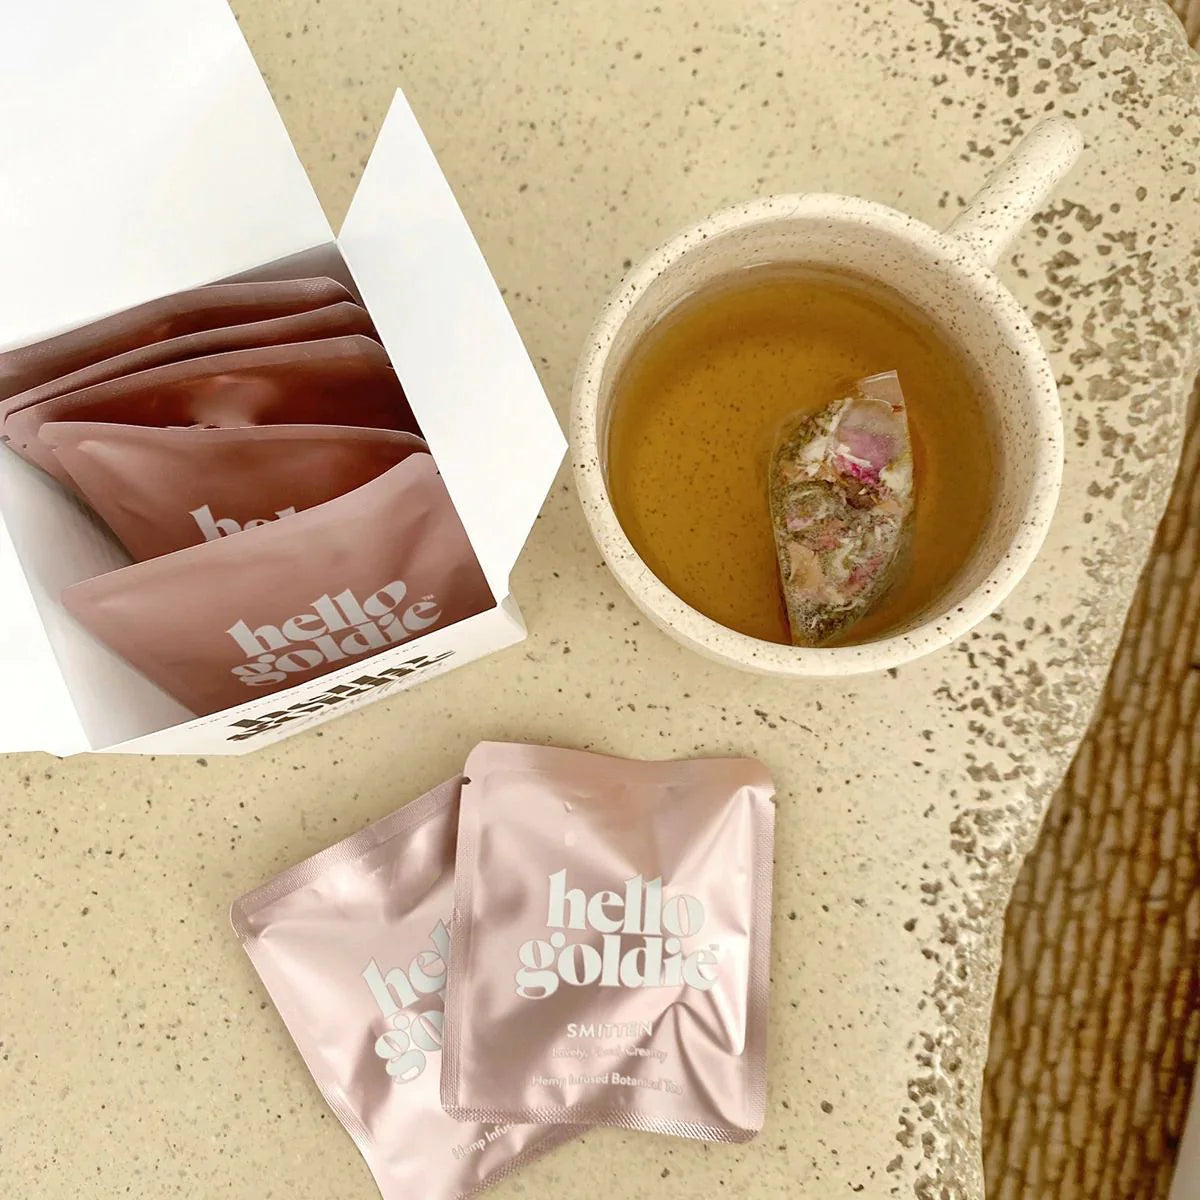 Hello Goldie Smitten botanical tea, 10/box